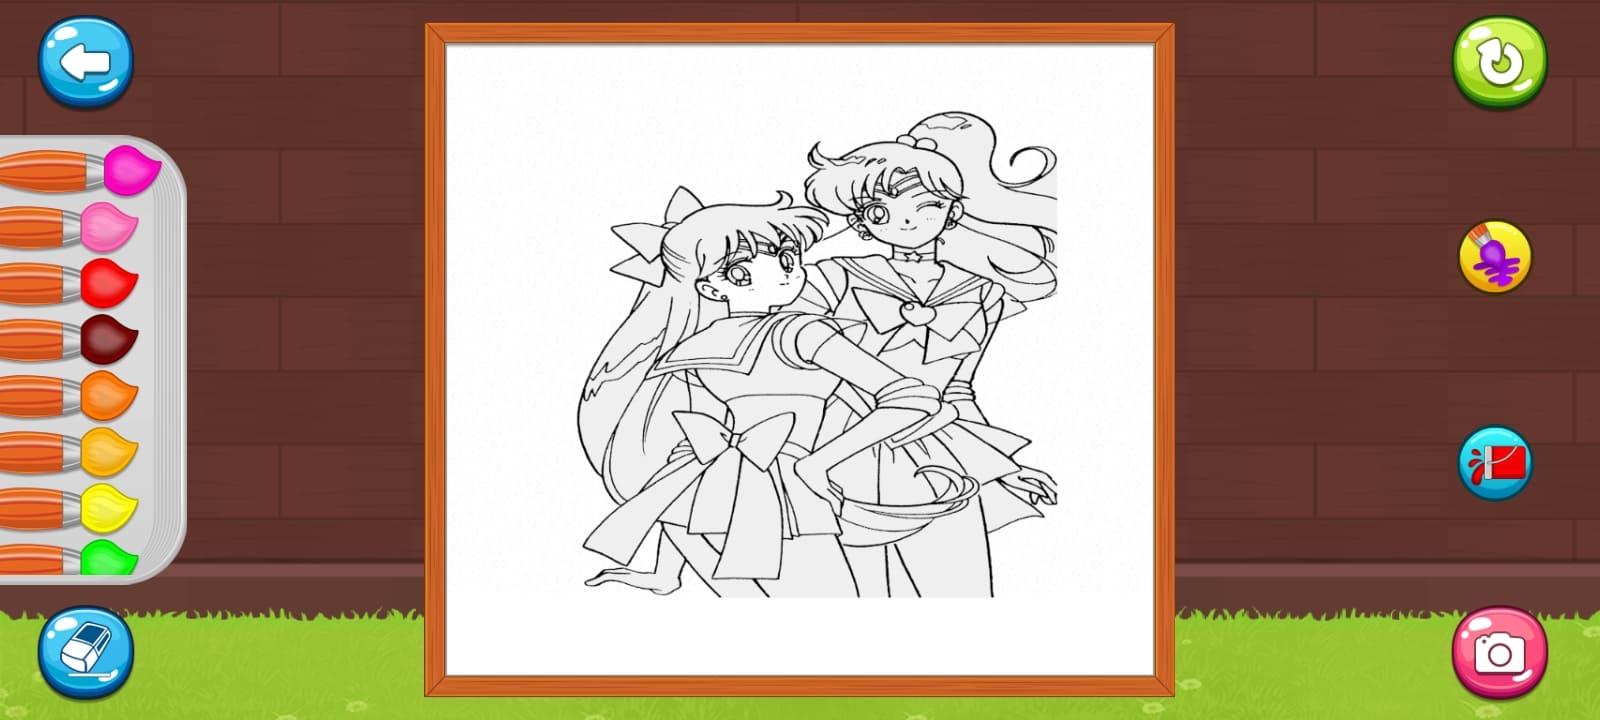 Download do APK de Anime Colorir para Android